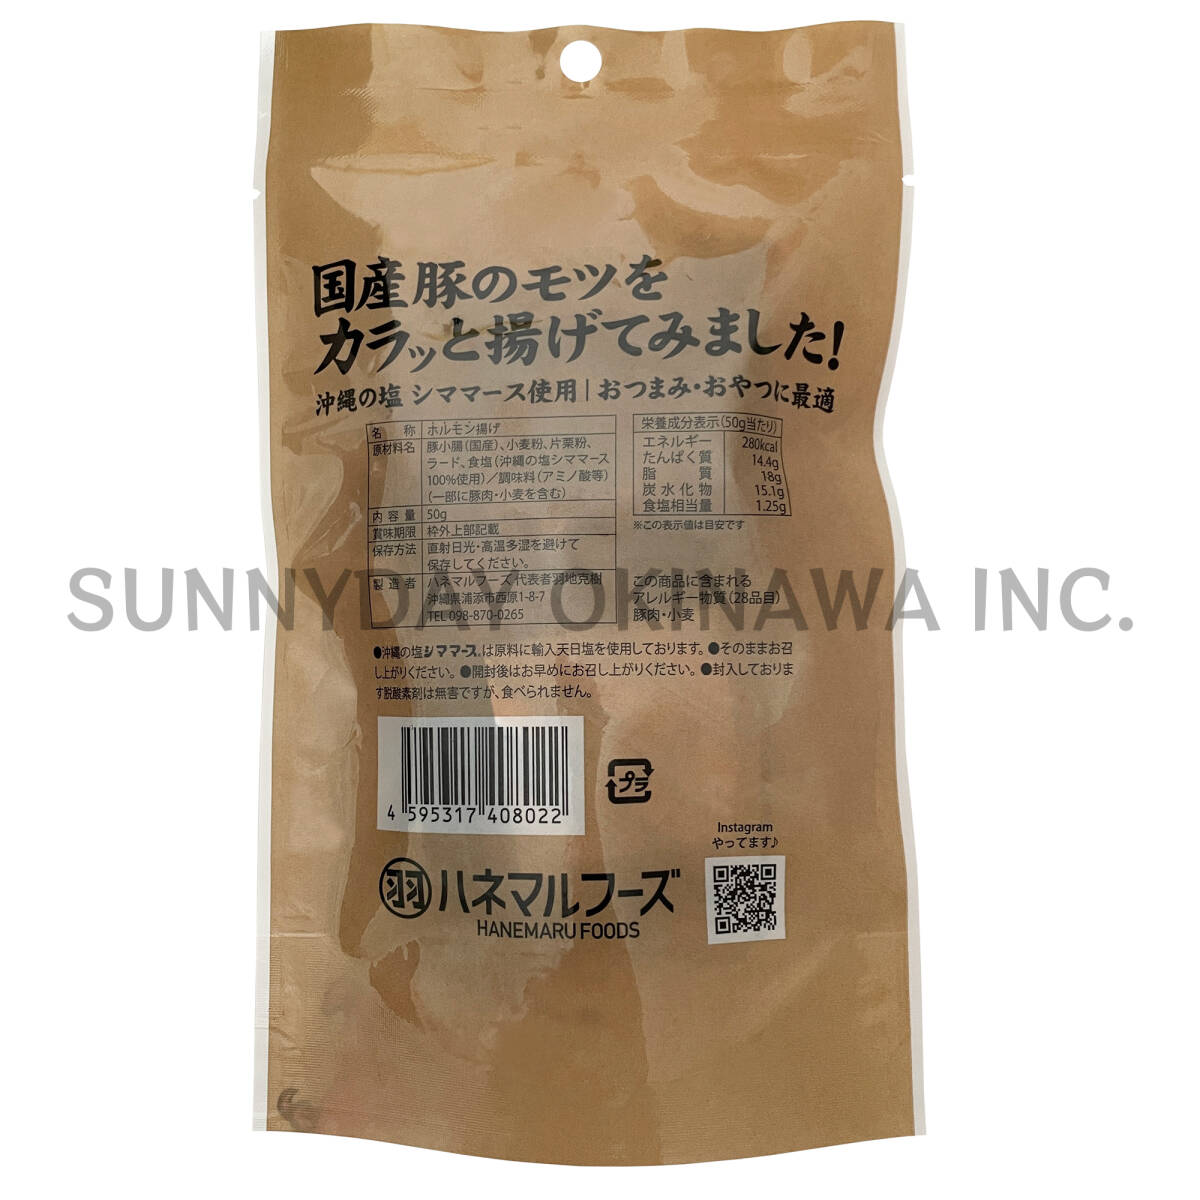 to. leather .. hormone ..2 kind 6 sack set is ne maru f-z Okinawa prefecture production chicken skin domestic production pig motsu Okinawa. salt si mama -s. earth production your order 